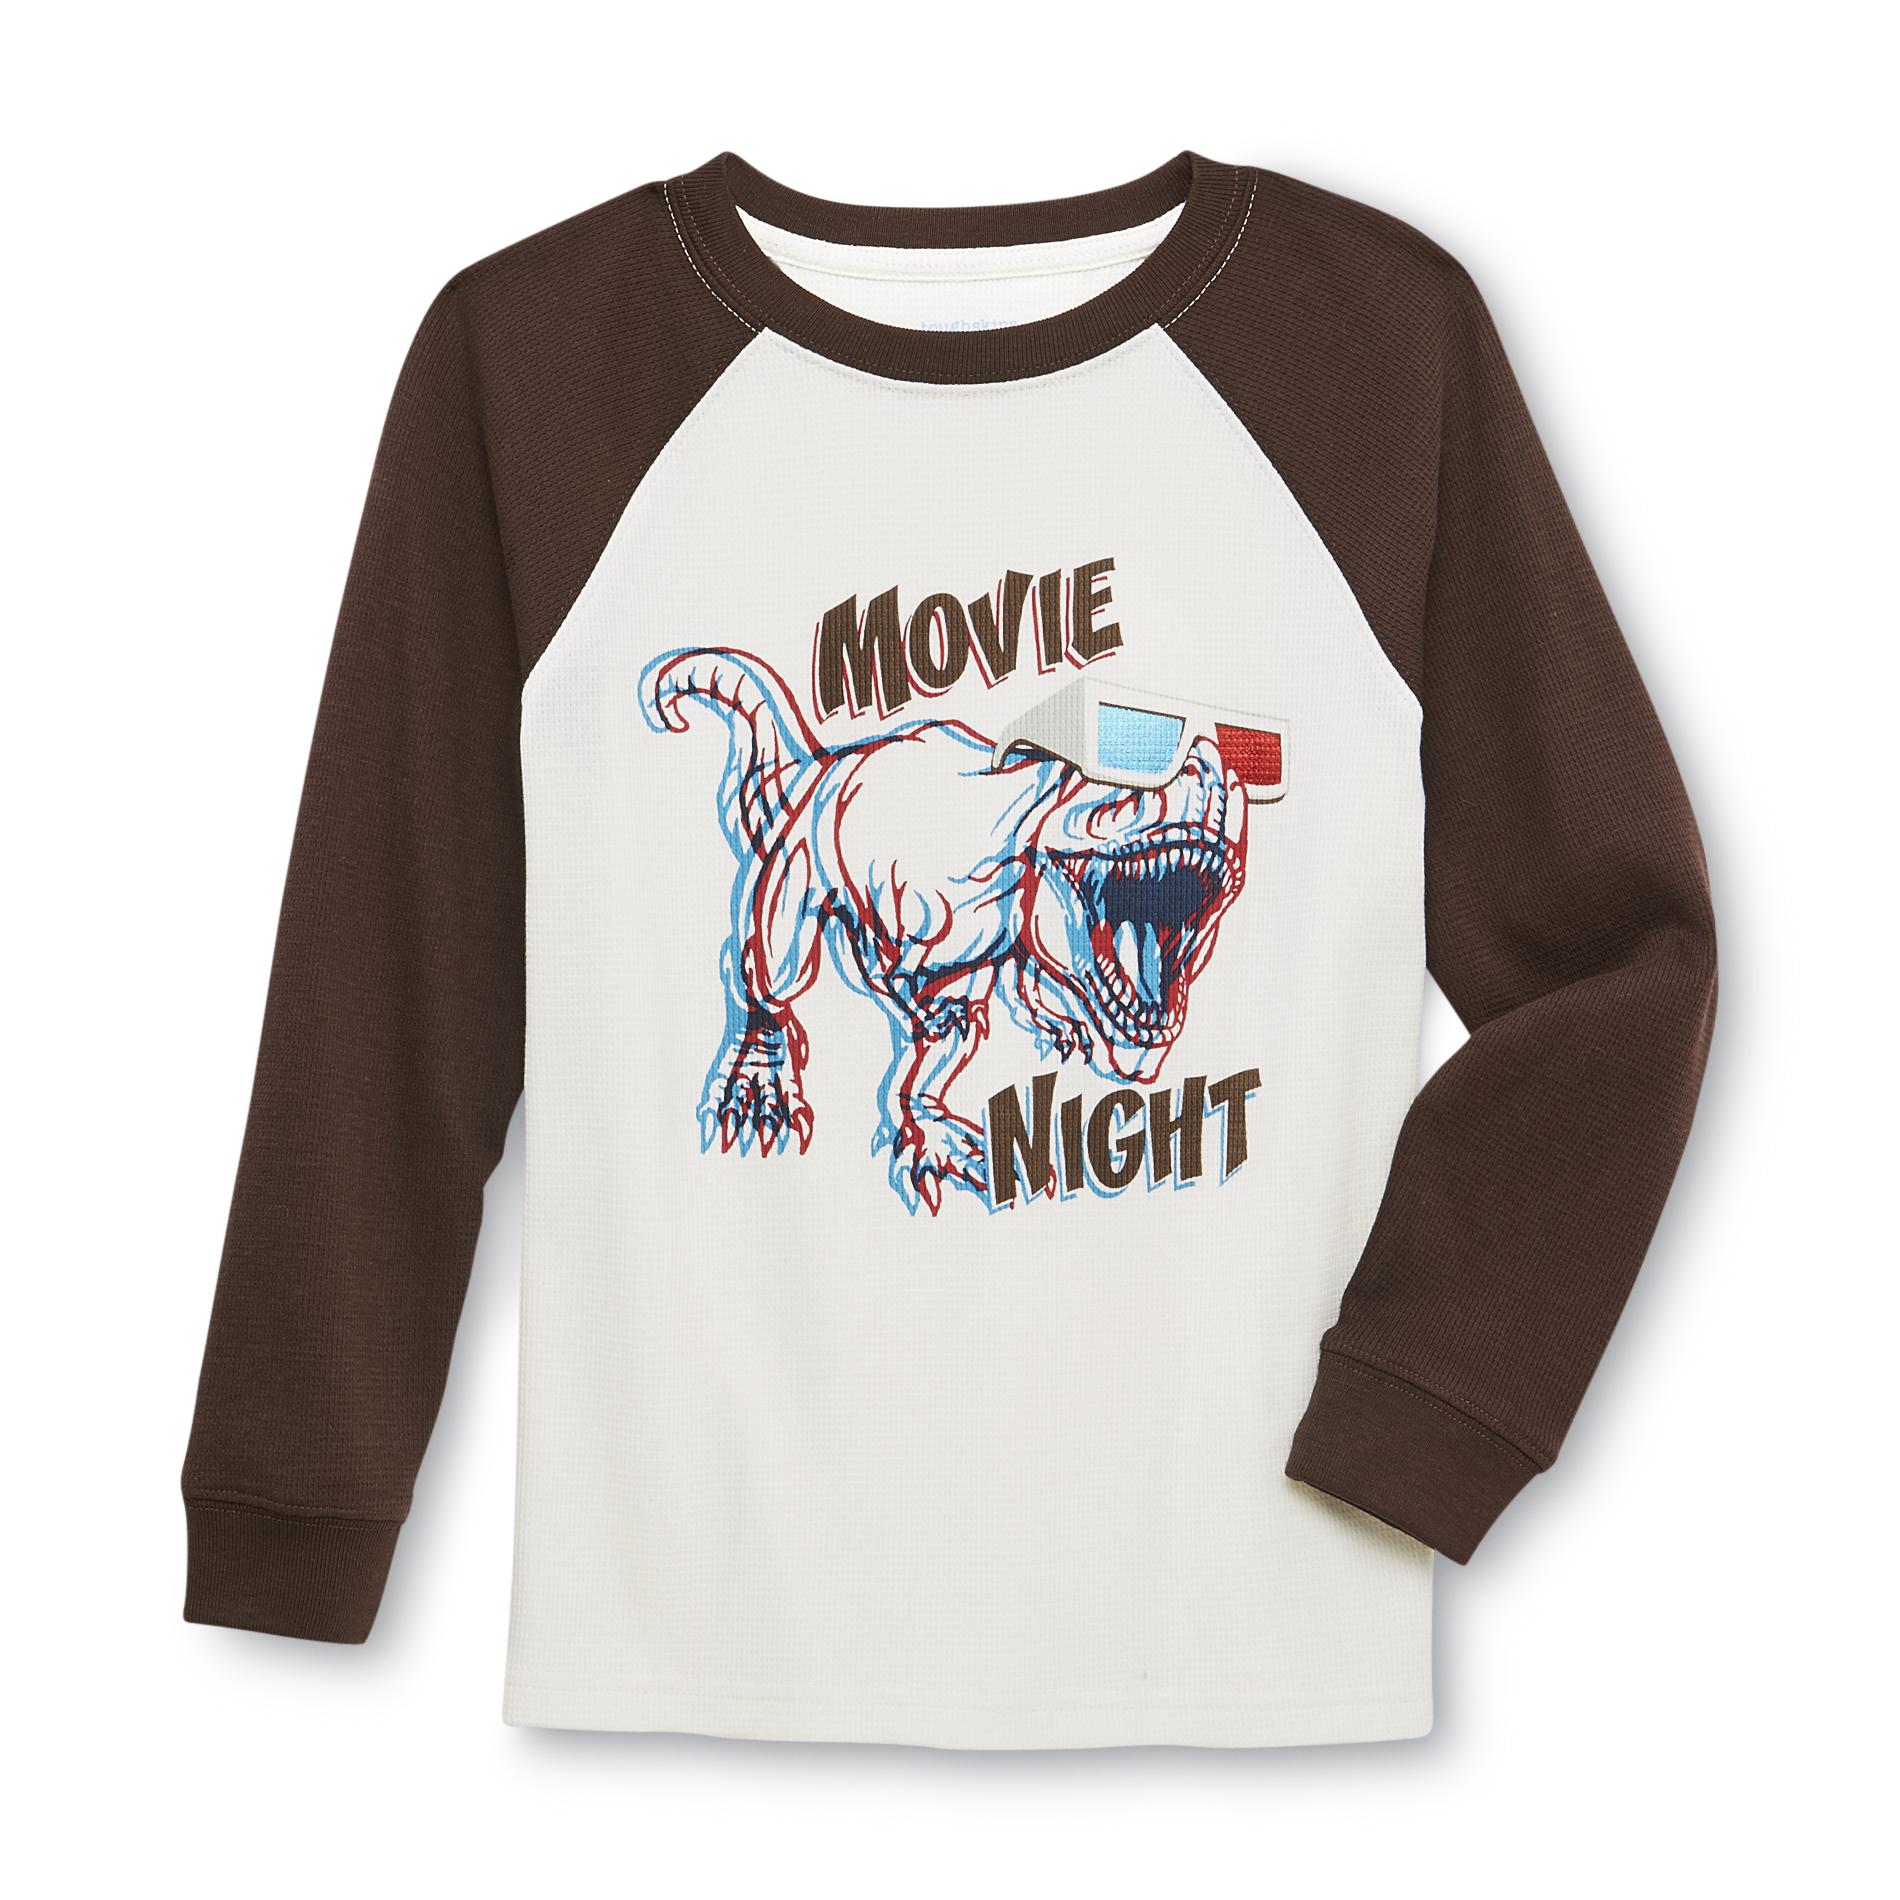 Toughskins Boy's Thermal Graphic T-Shirt - Movie Night